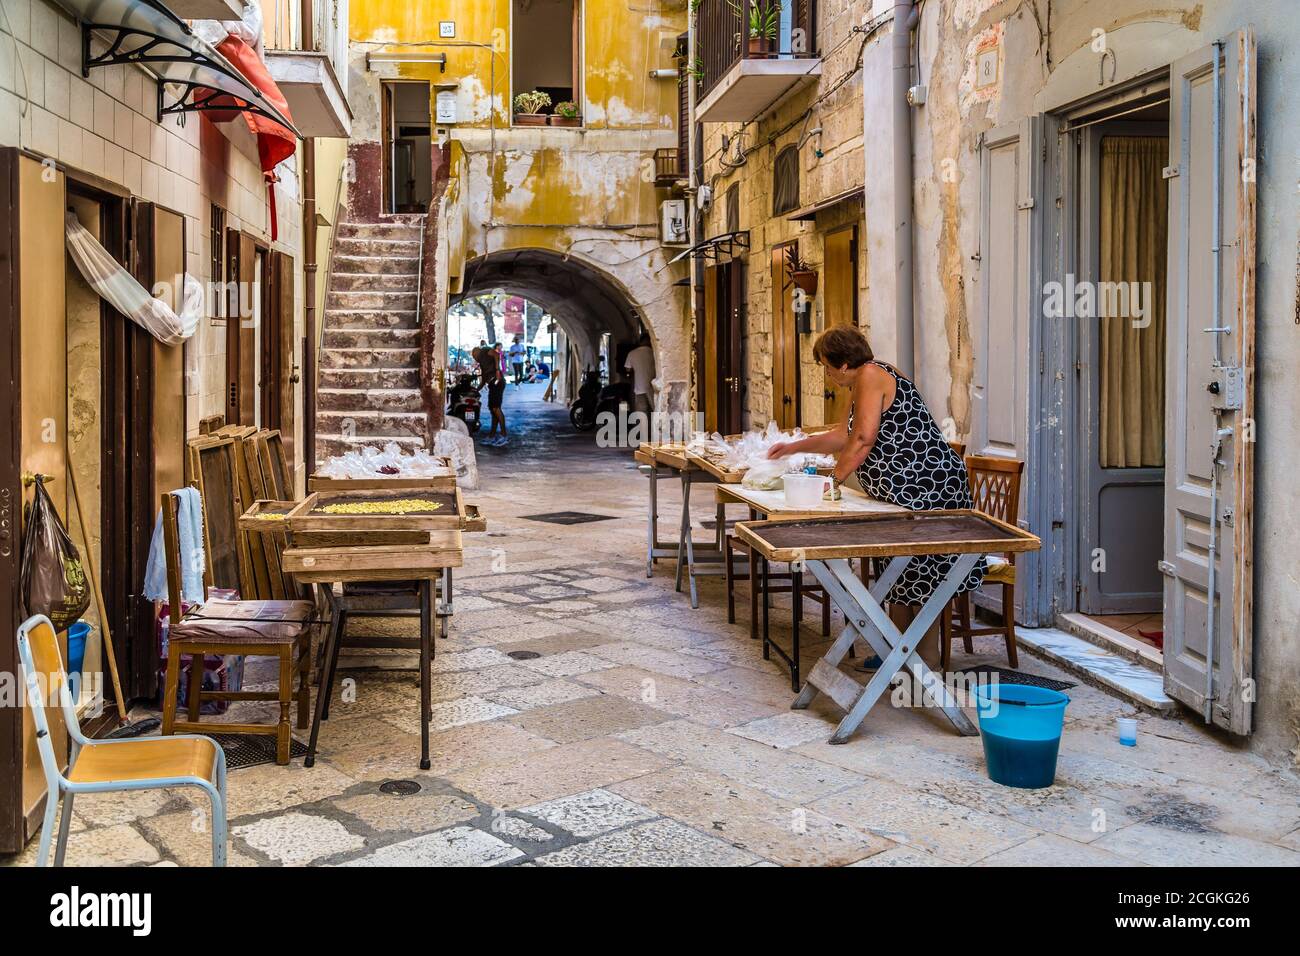 BARI, ITALY - SEPTEMBER 1, 2020: housewives making orecchiette in the streets of Bari Vecchia Stock Photo